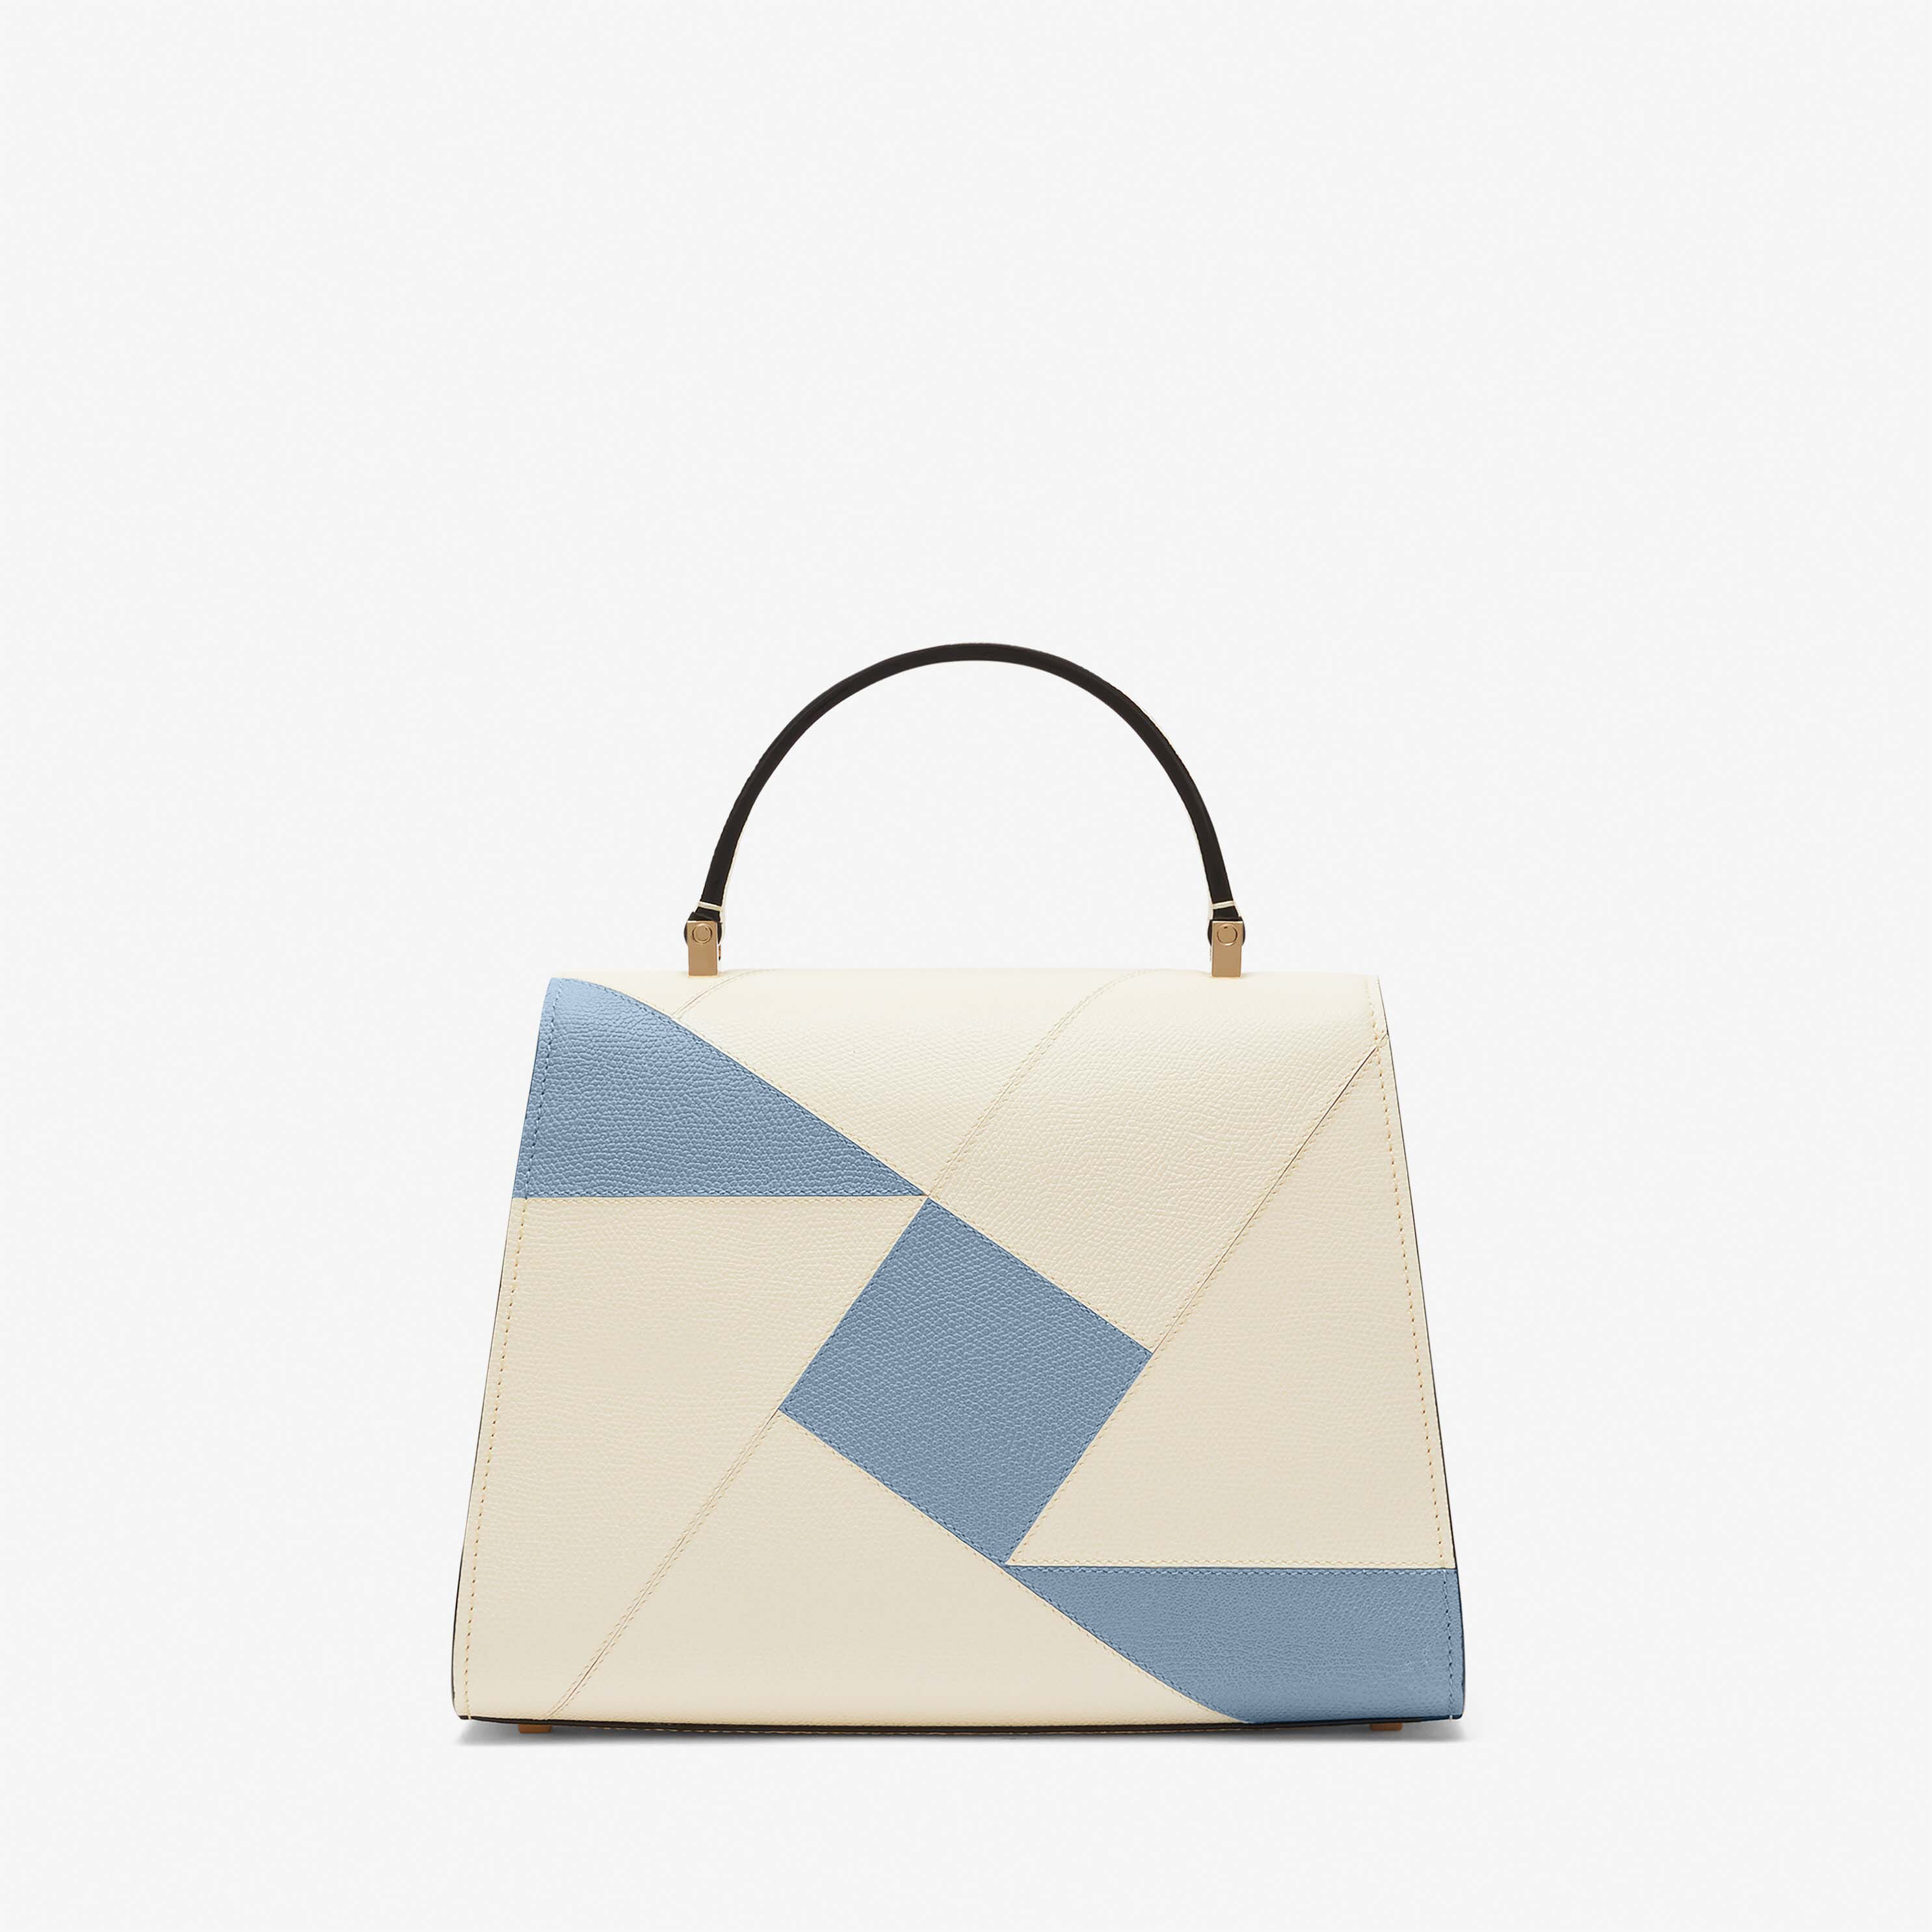 Iside Carousel Top handle Medium bag - Pergamena White/Shirt Blue - Vitello VS-Intarsio Rombo - Valextra - 5